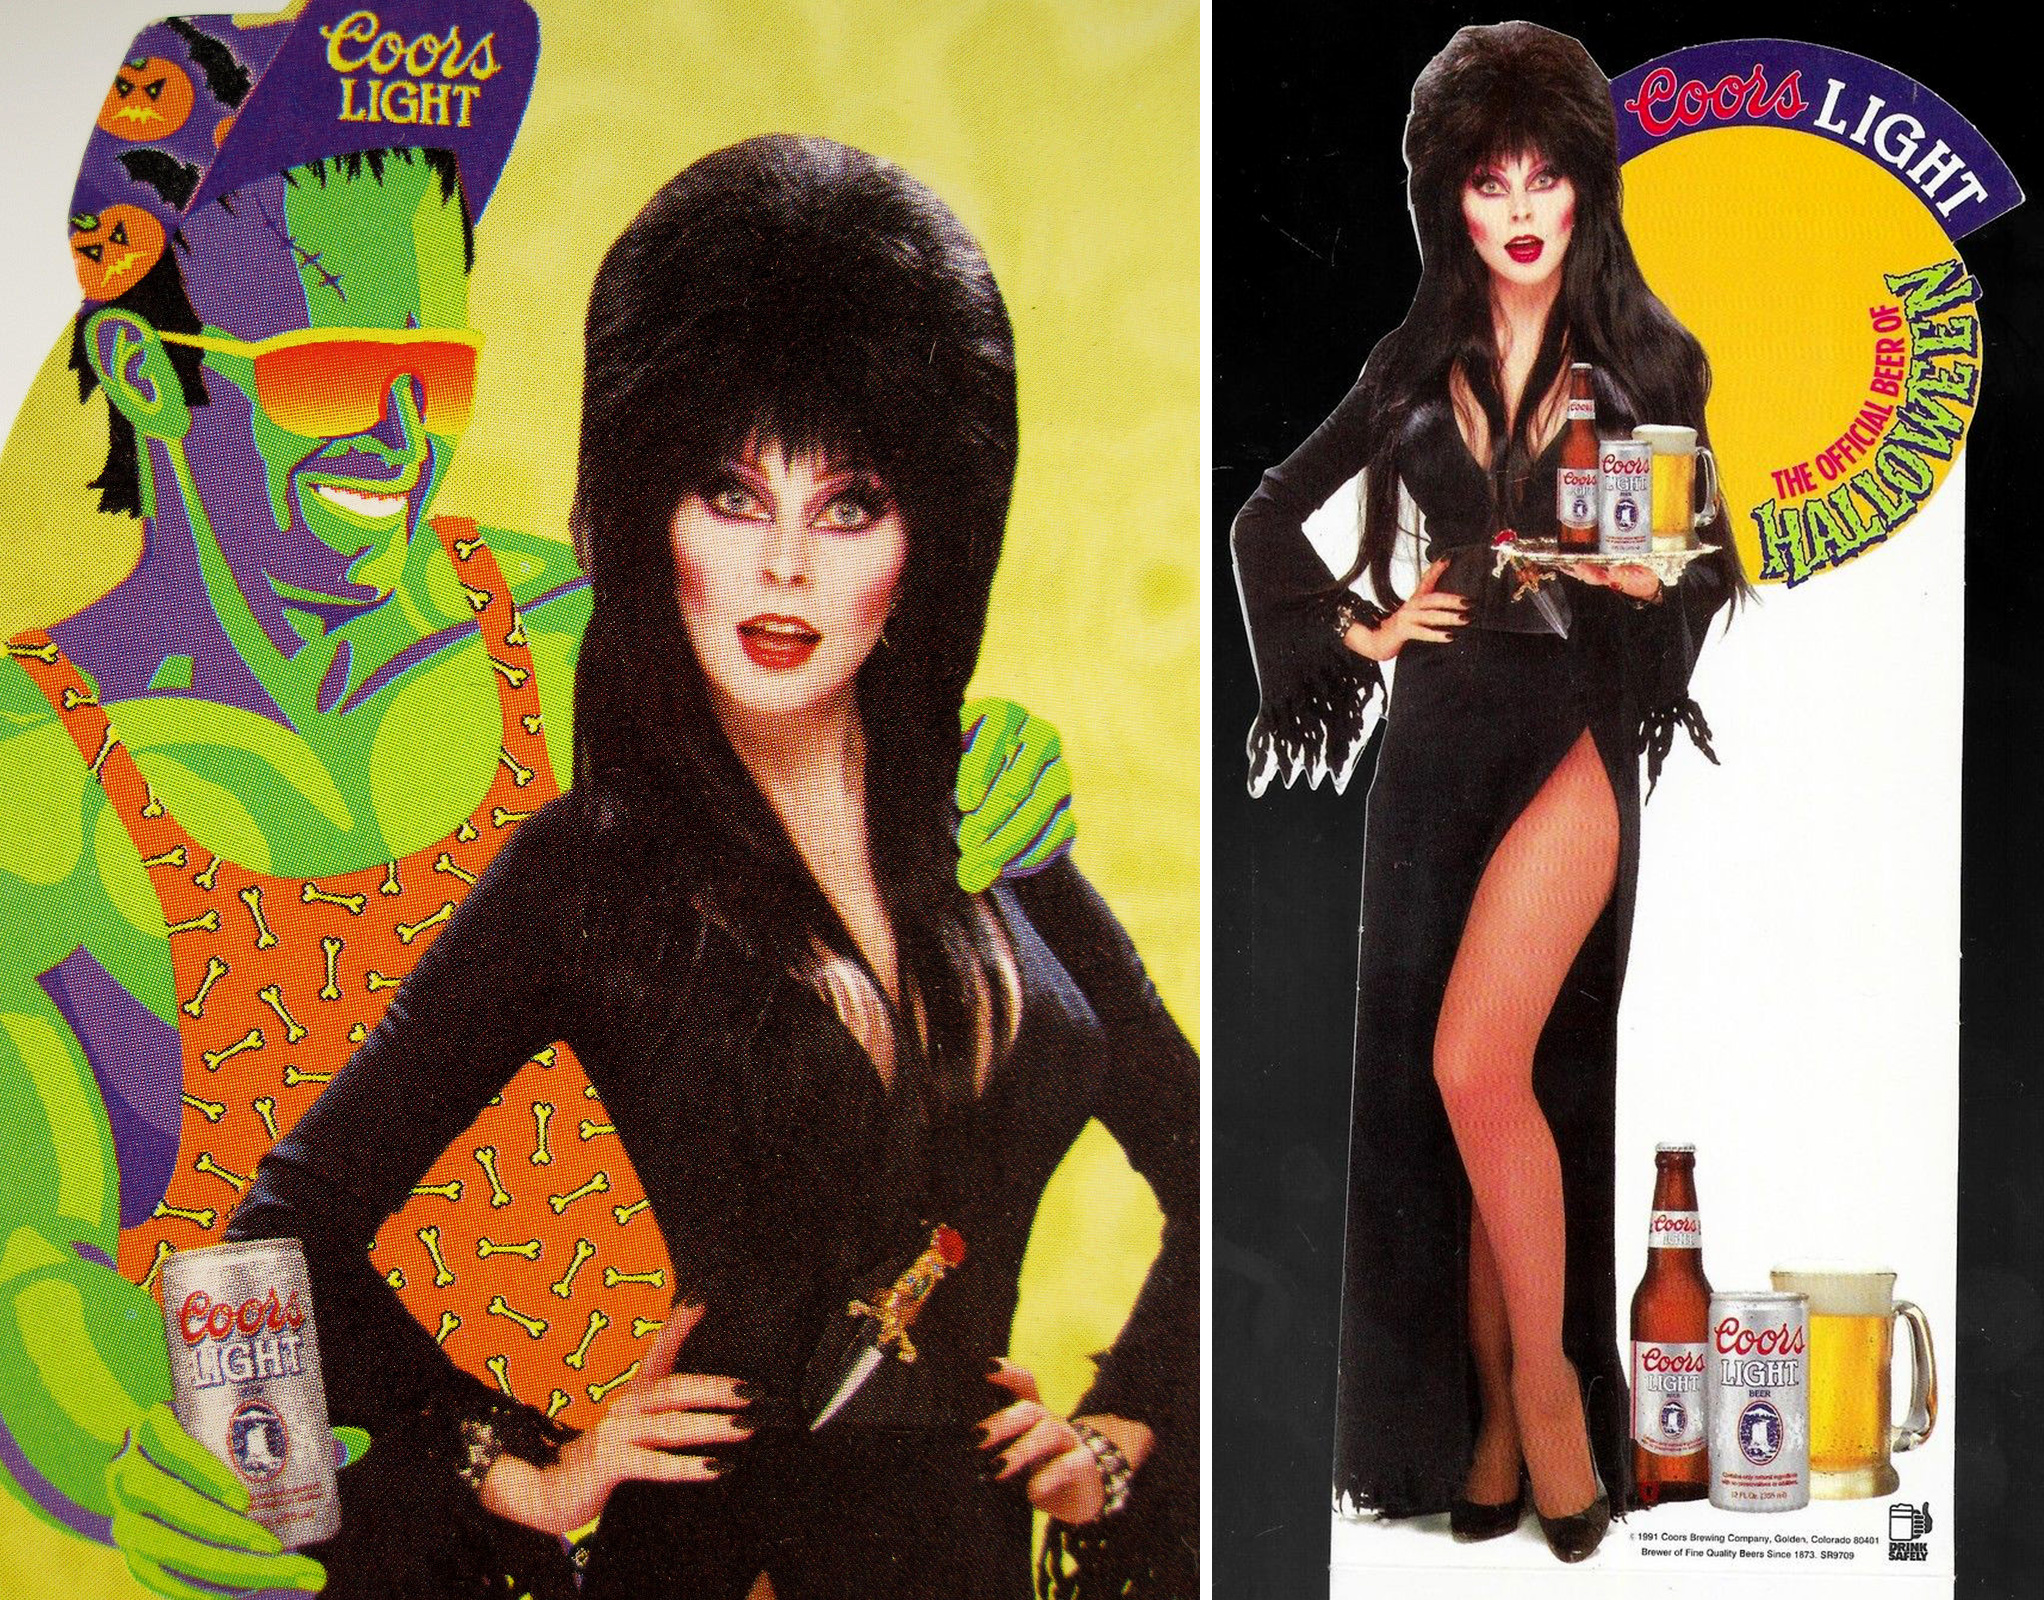 Elvira spookswoman for Coors